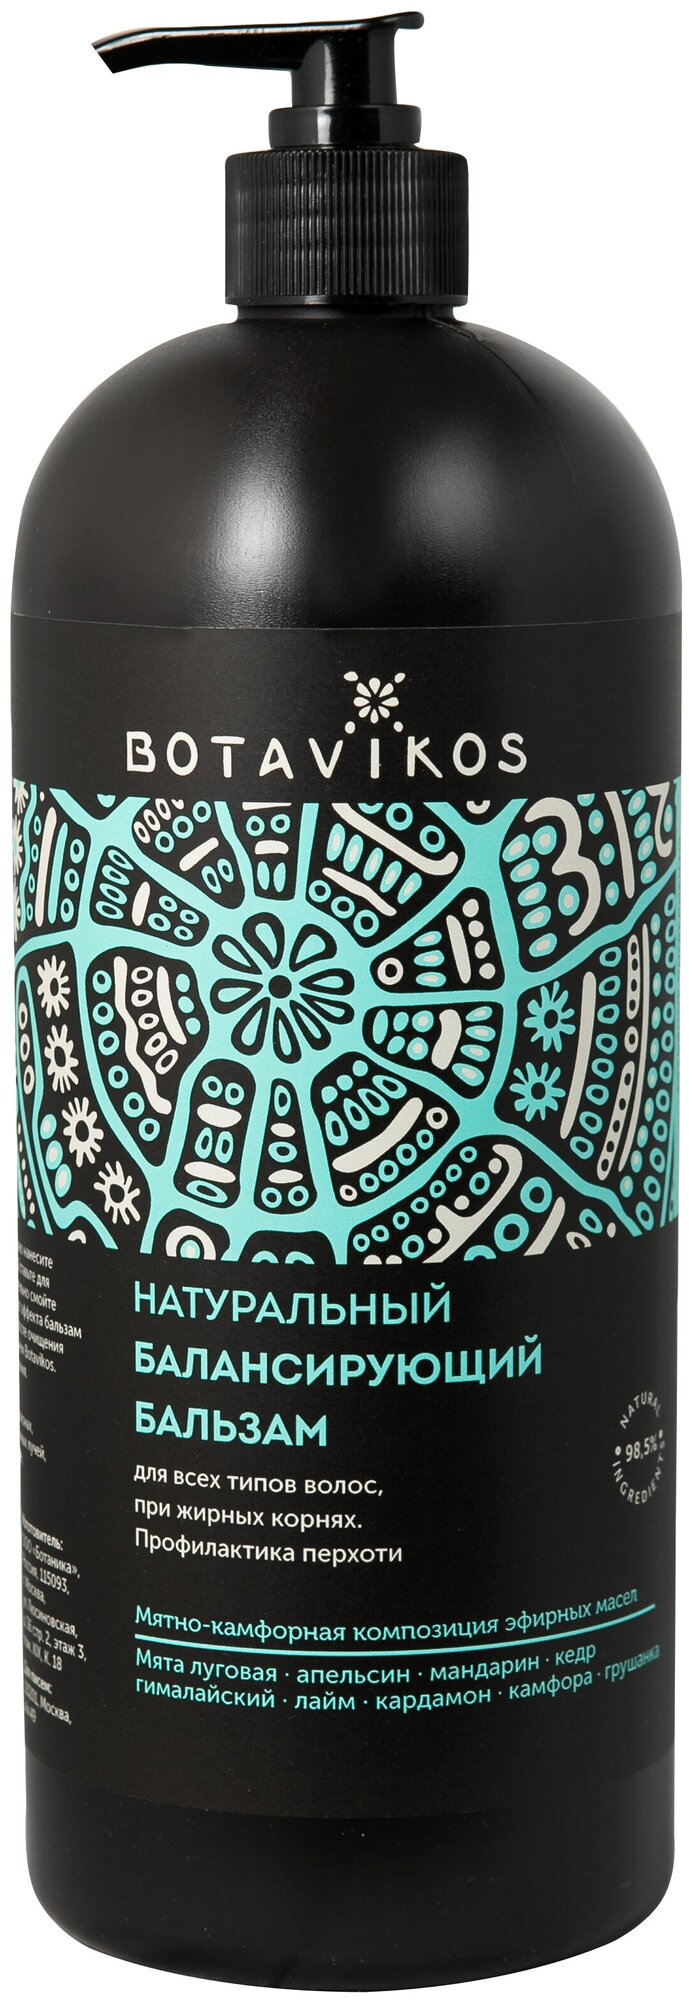 Botavikos Бальзам "Балансирующий", 200 мл (Botavikos, ) - фото №1